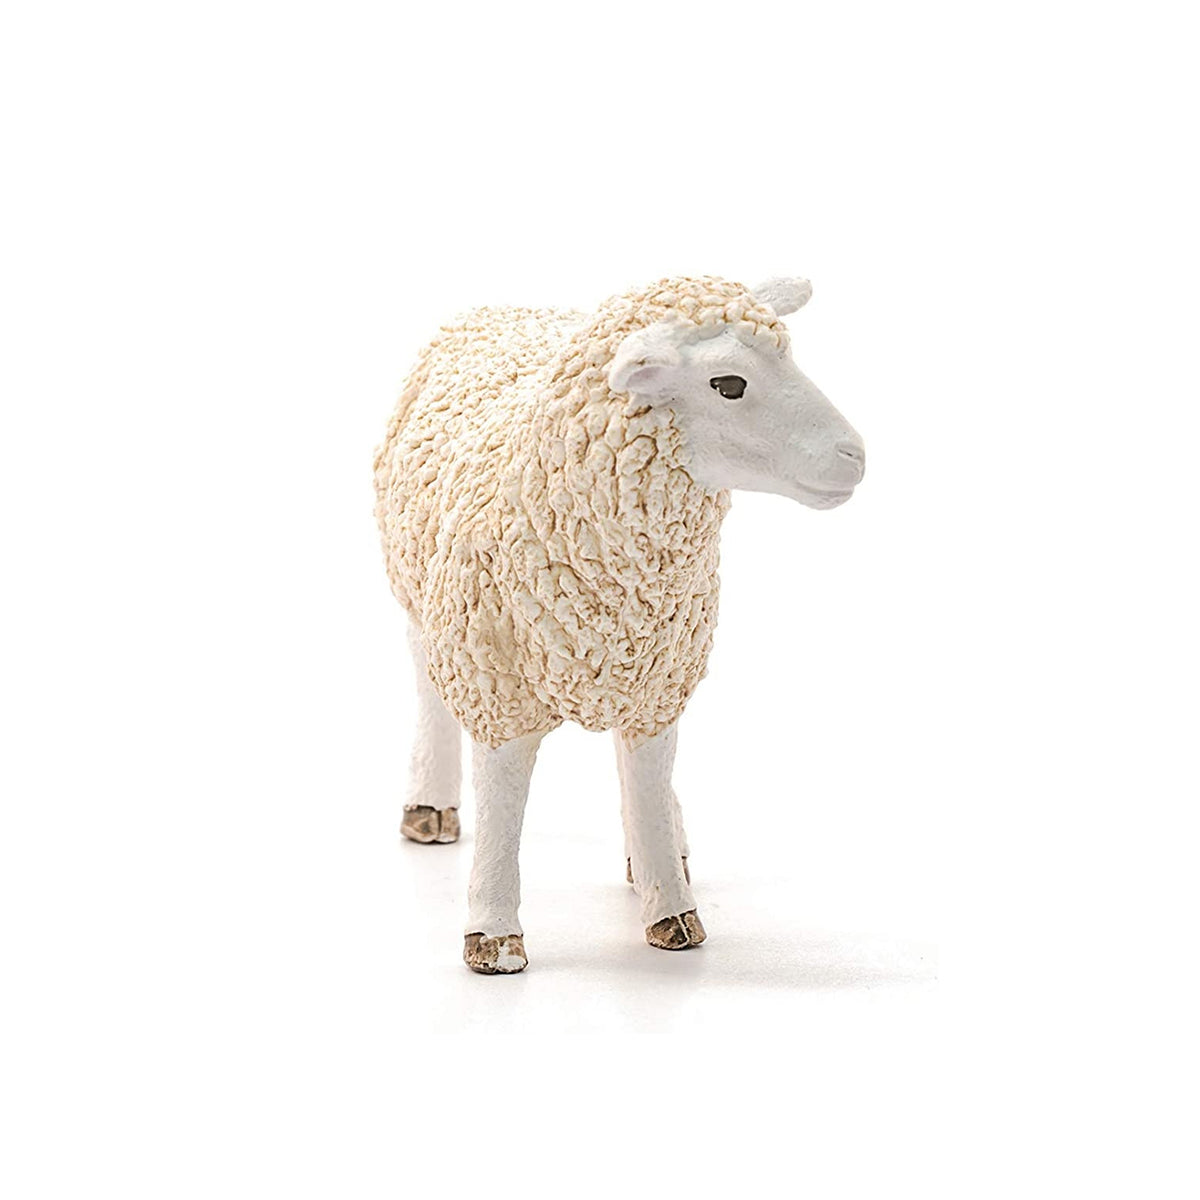 Schleich Sheep Dimension item: 9 x 6,5 x 4 cm